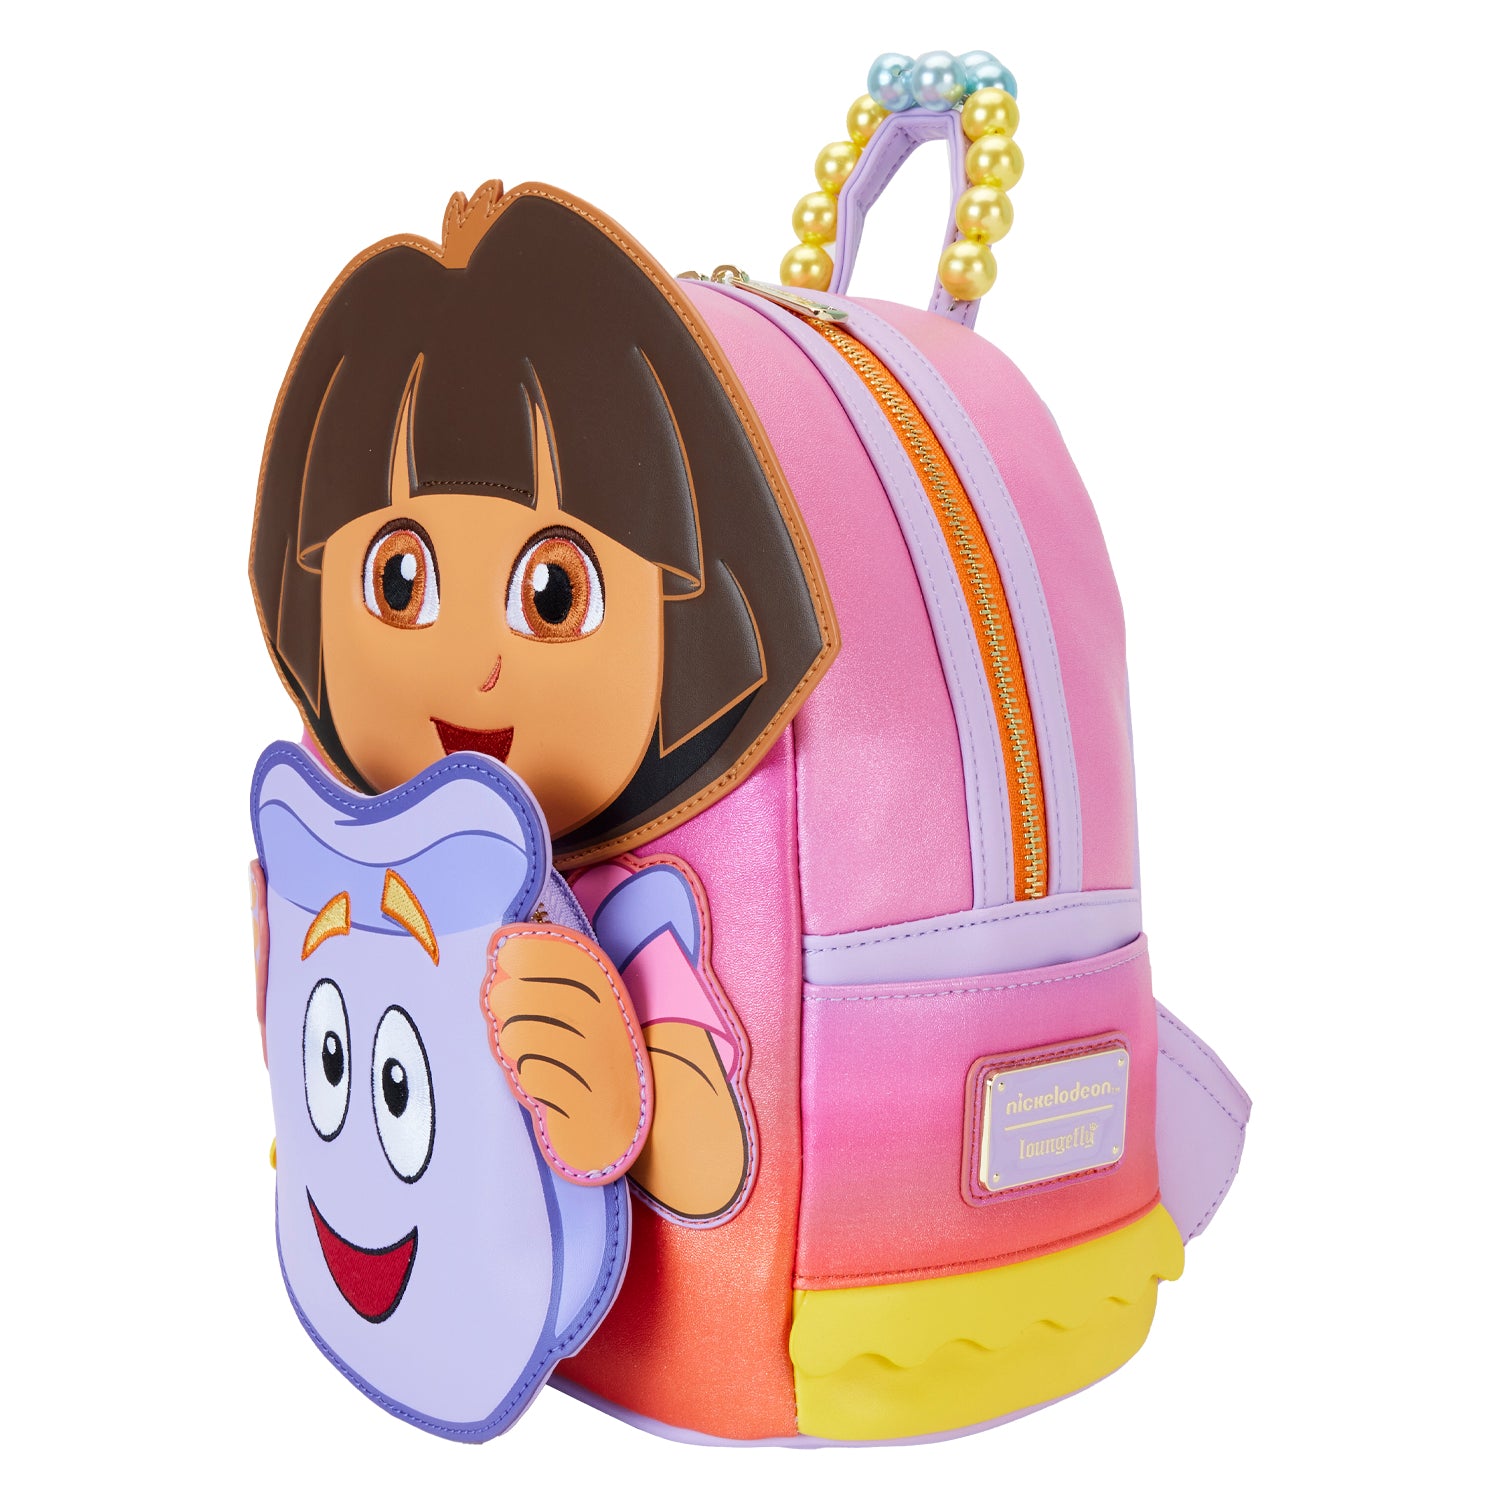 Loungefly x Nickelodeon Dora the Explorer Backpack Cosplay Mini Backpack